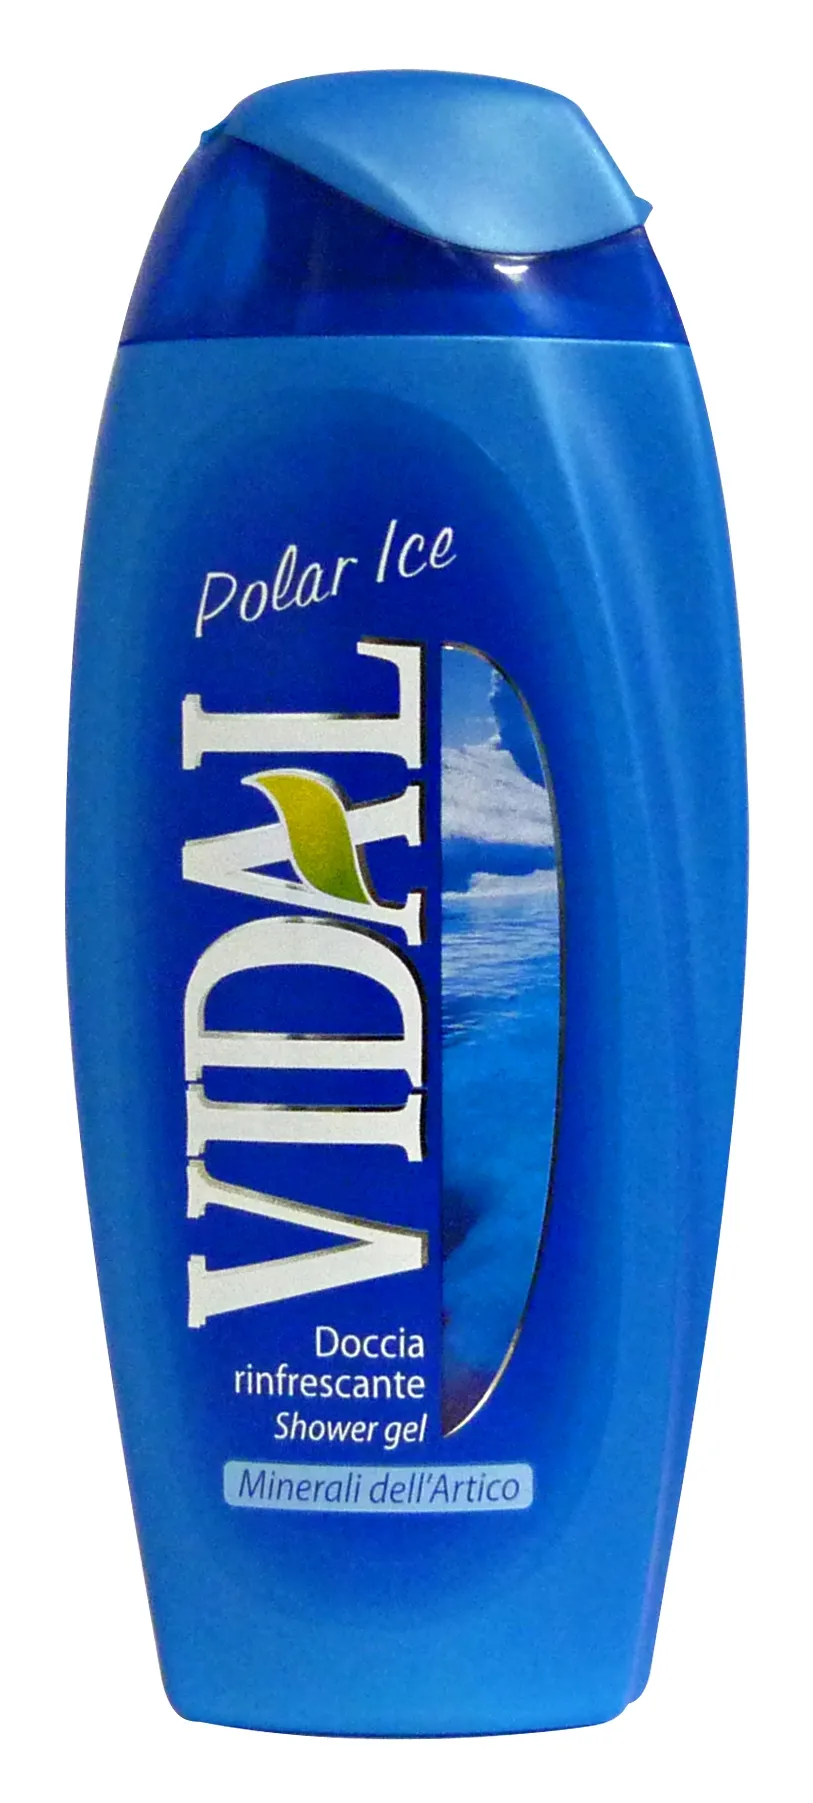 "VIDAL Doccia polar ice 250 ml. - Doccia schiuma"